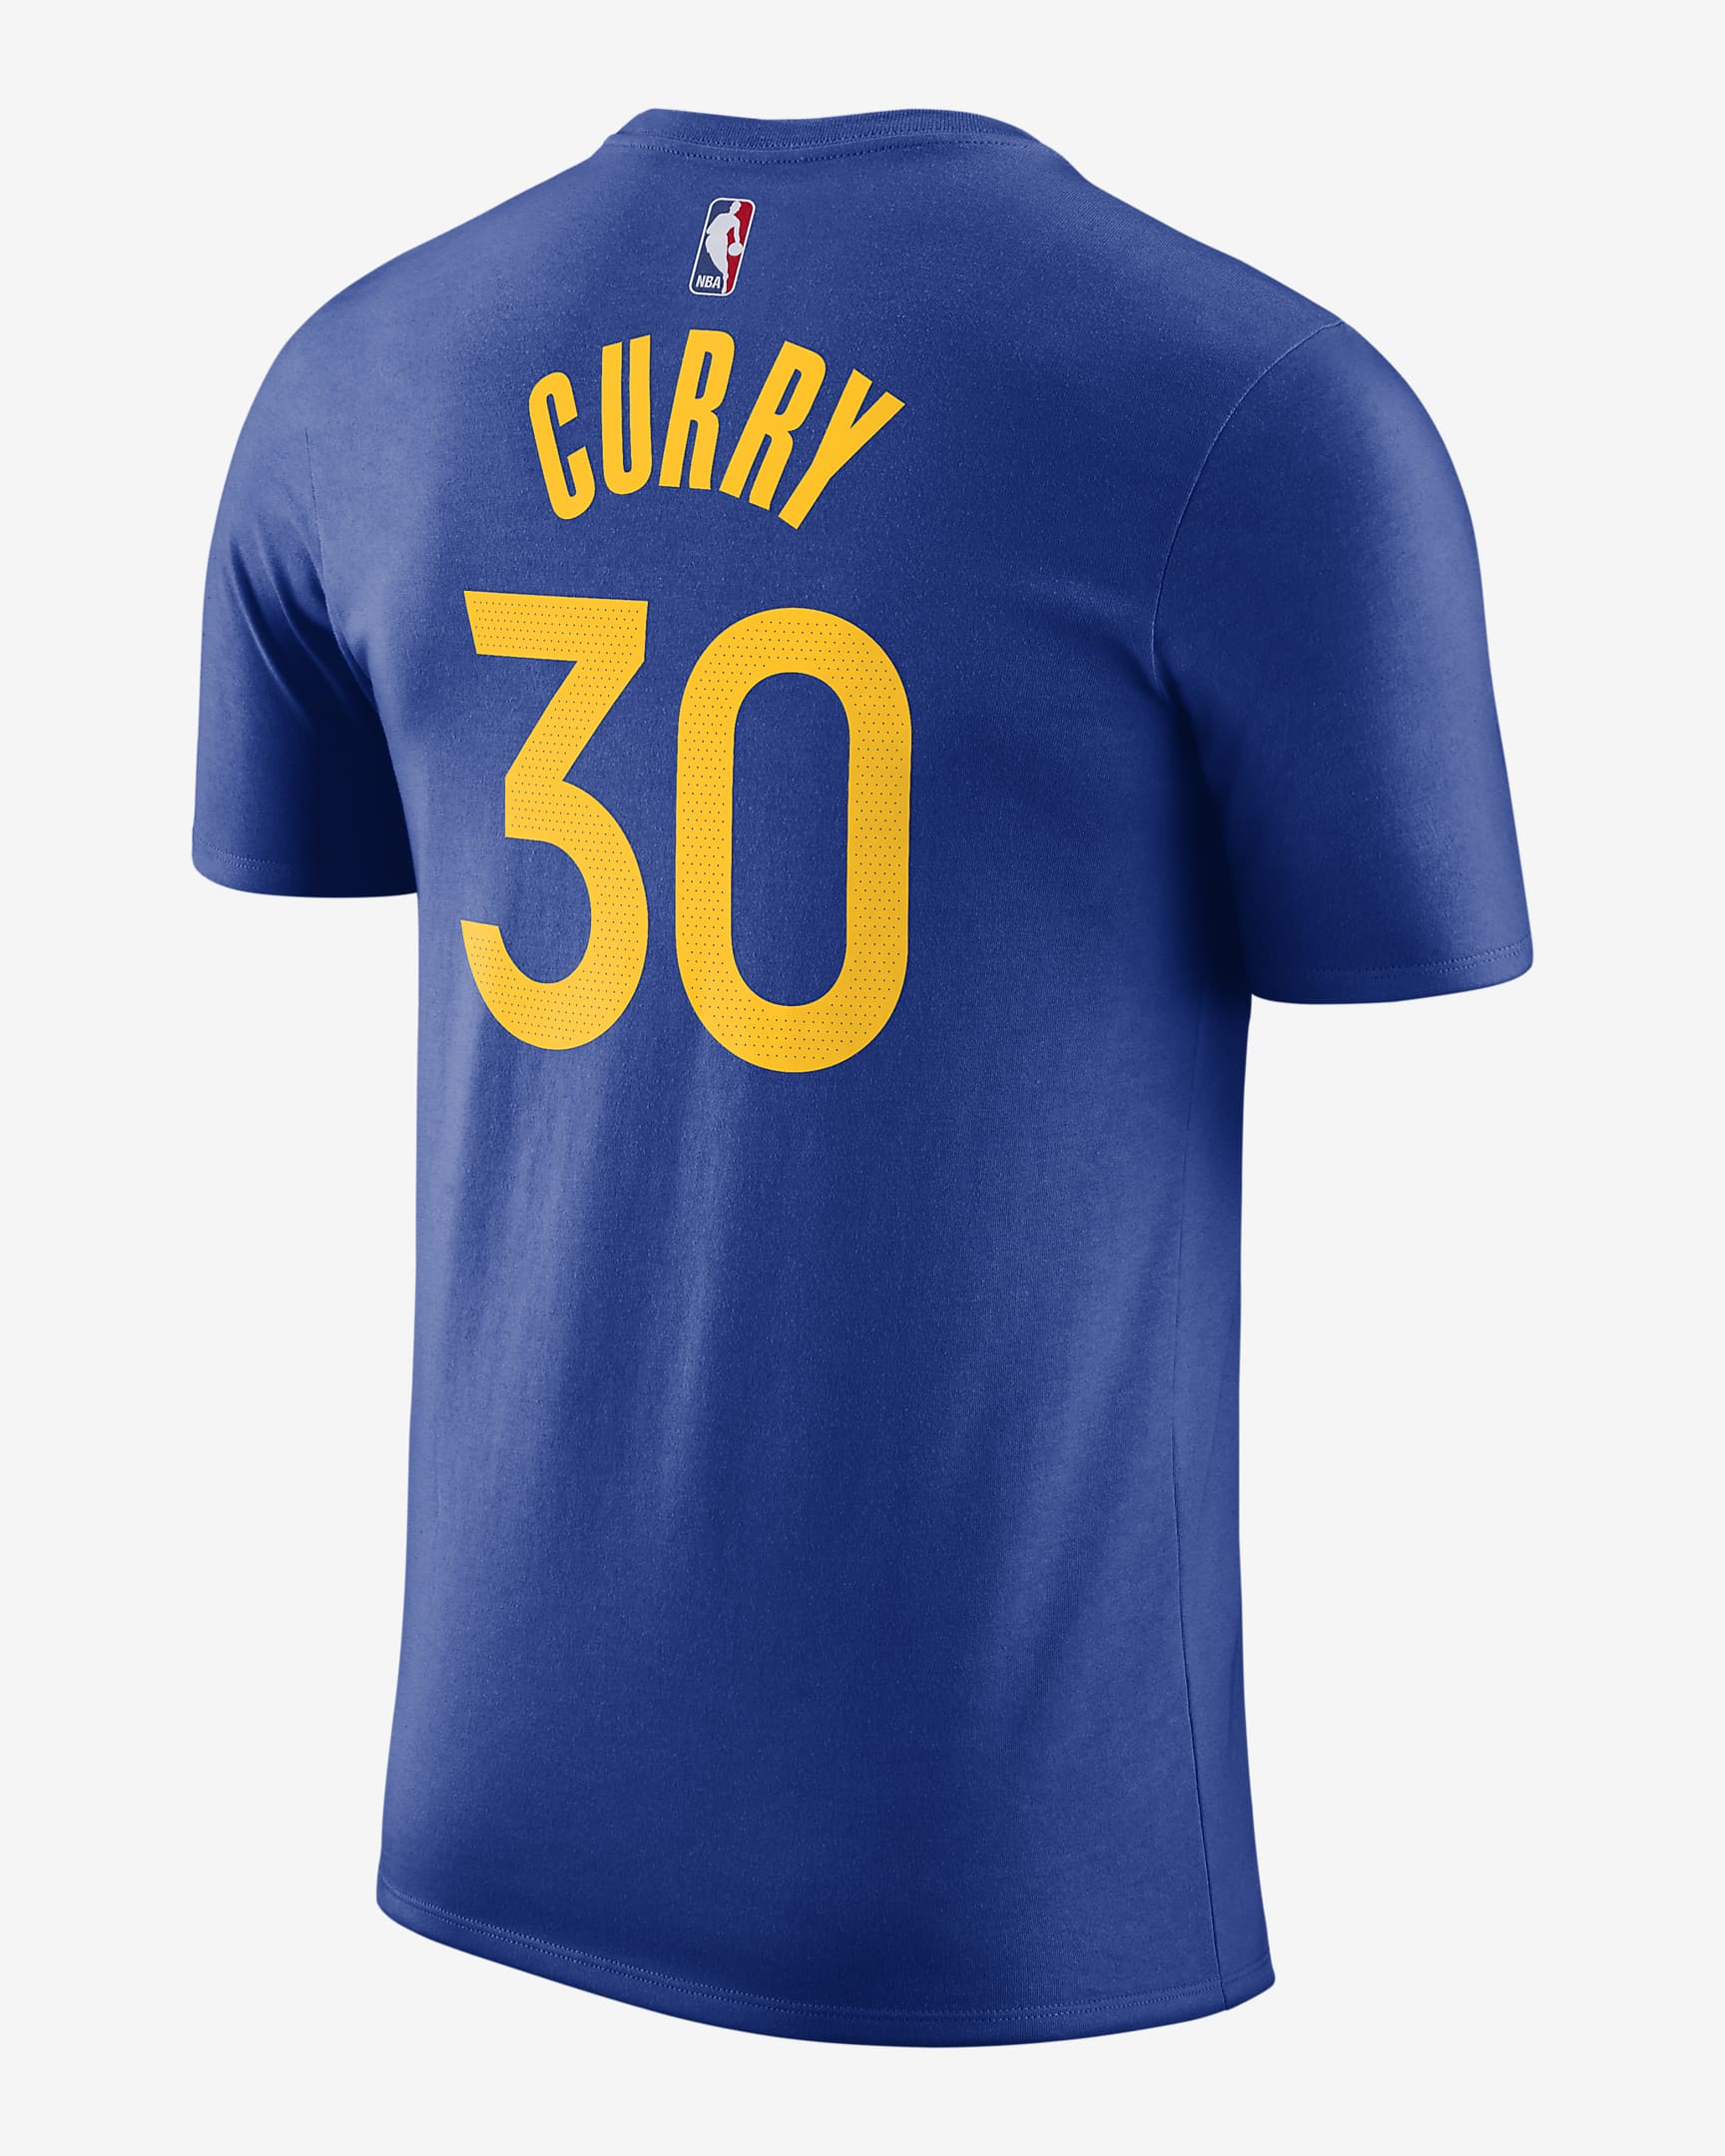 Golden State Warriors Men's Nike NBA T-Shirt - Rush Blue